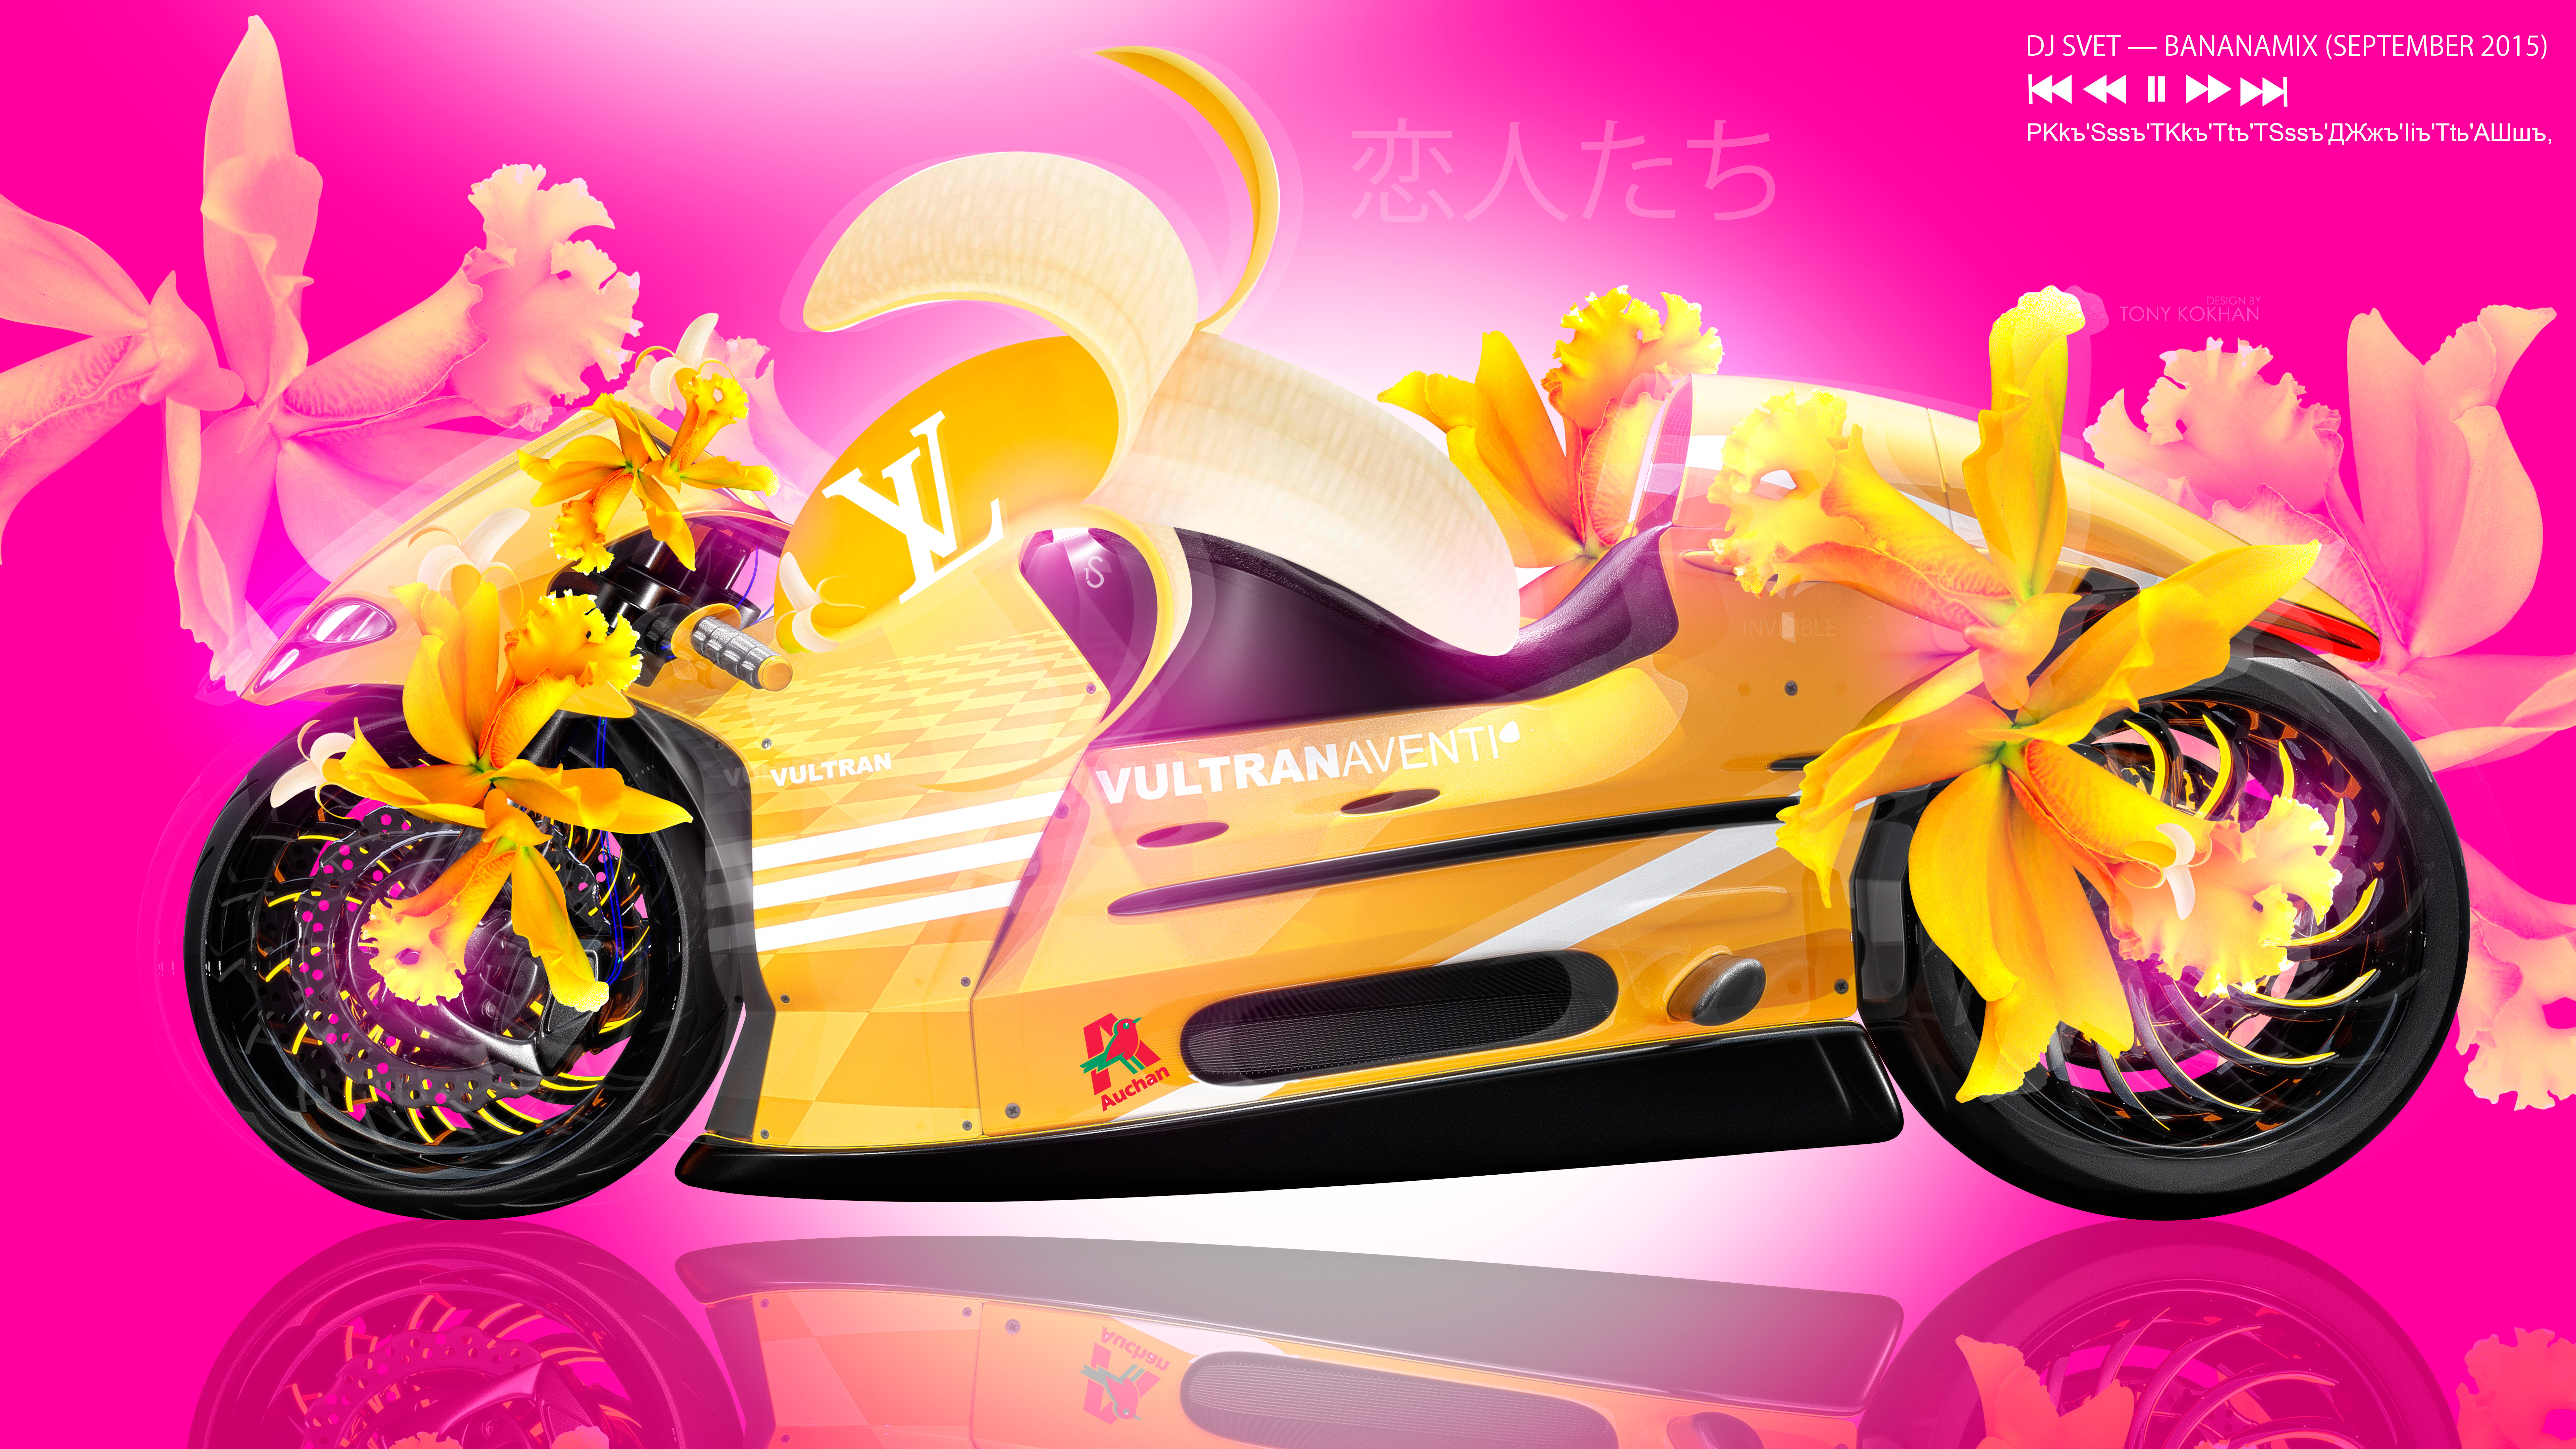 Vultran-Aventi-Super-Lovers-Banana-Flowers-Mix-Music-Player-Dj-Svet-Louis-Vuitton-Moto-Art-Bike